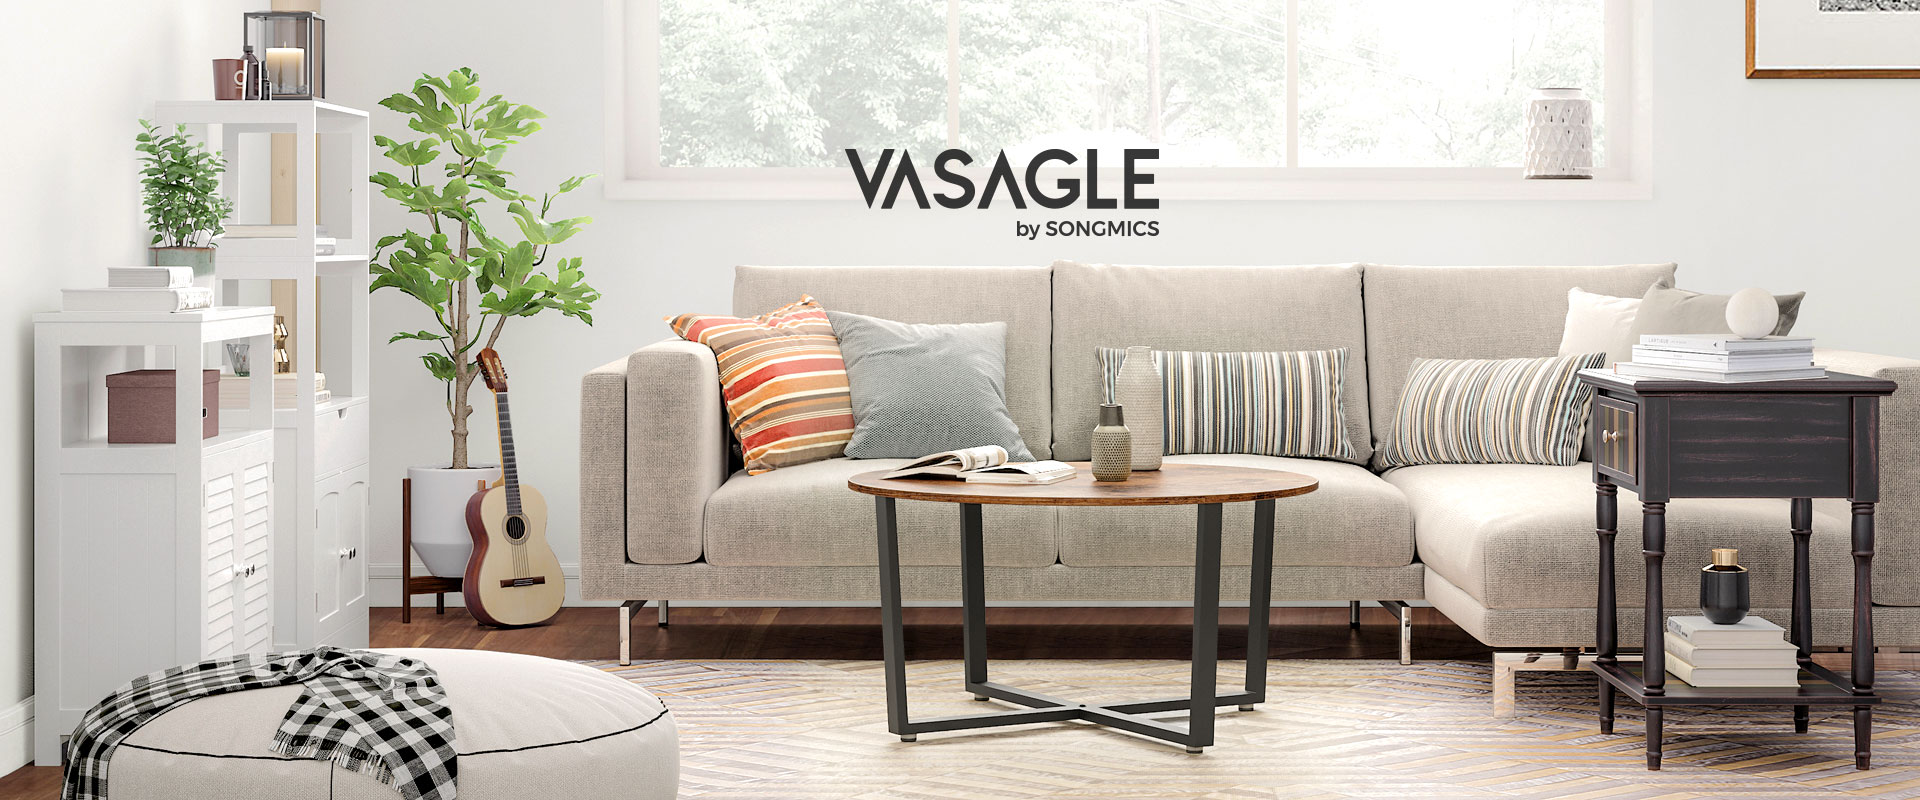 VASAGLE home accent furniture